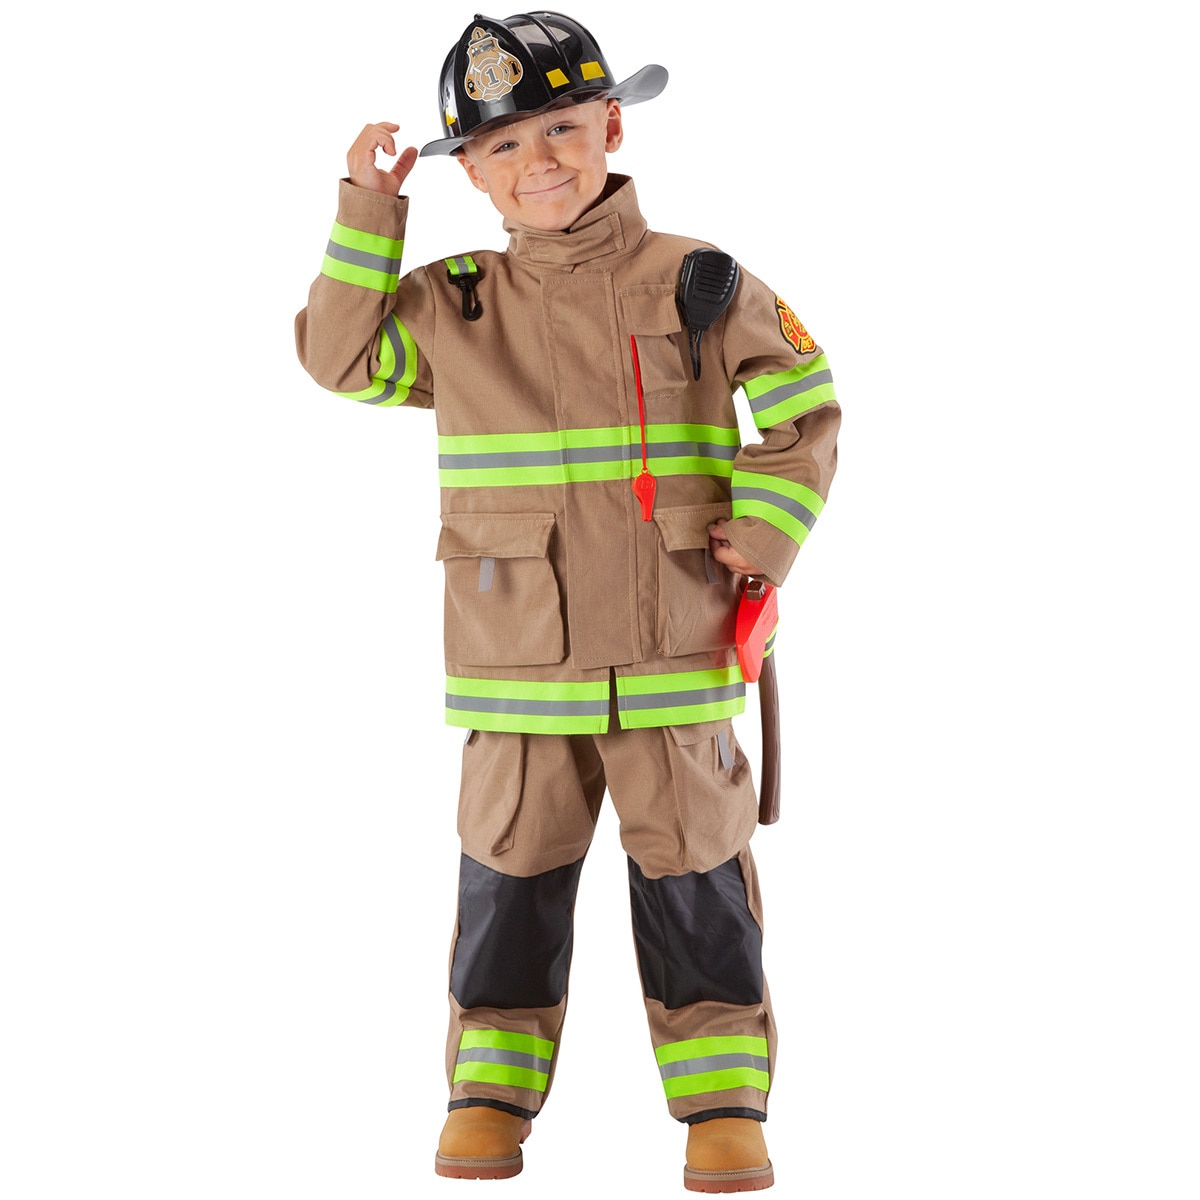 Teetot Kid's Adventure Themed Role-Play Costume Firefighter